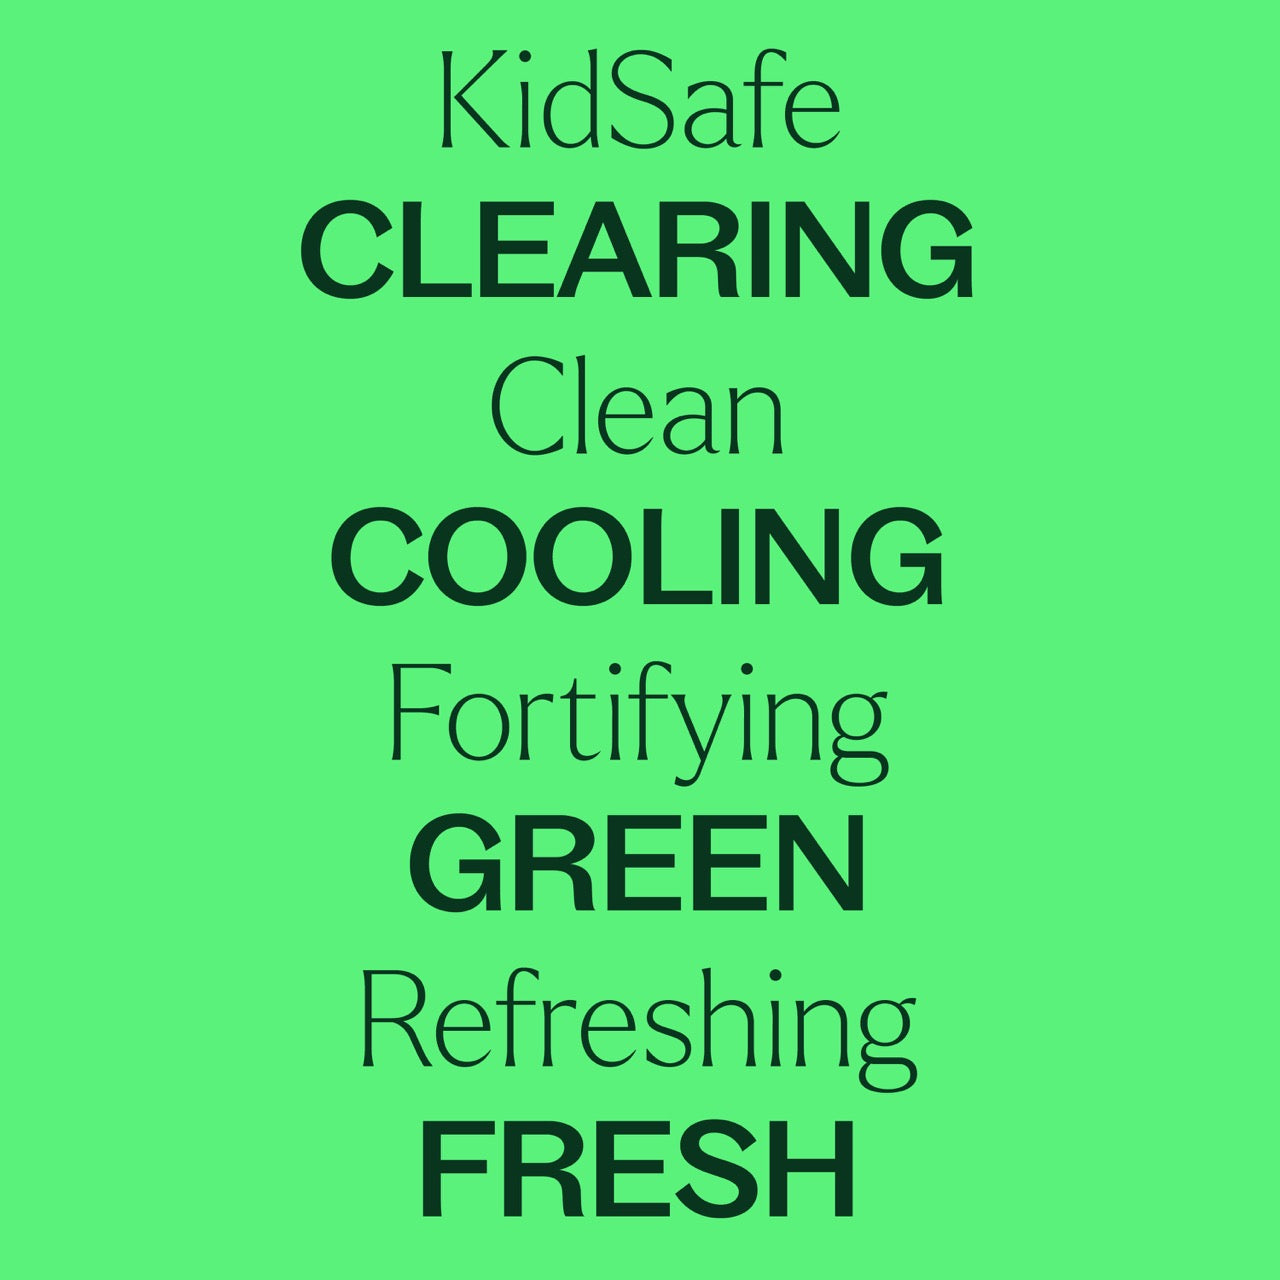 KidSafe Feelin' Good 3 Set main benefits. KidSafe, clearing, clean, cooling, fortifying, green, refreshing, fresh